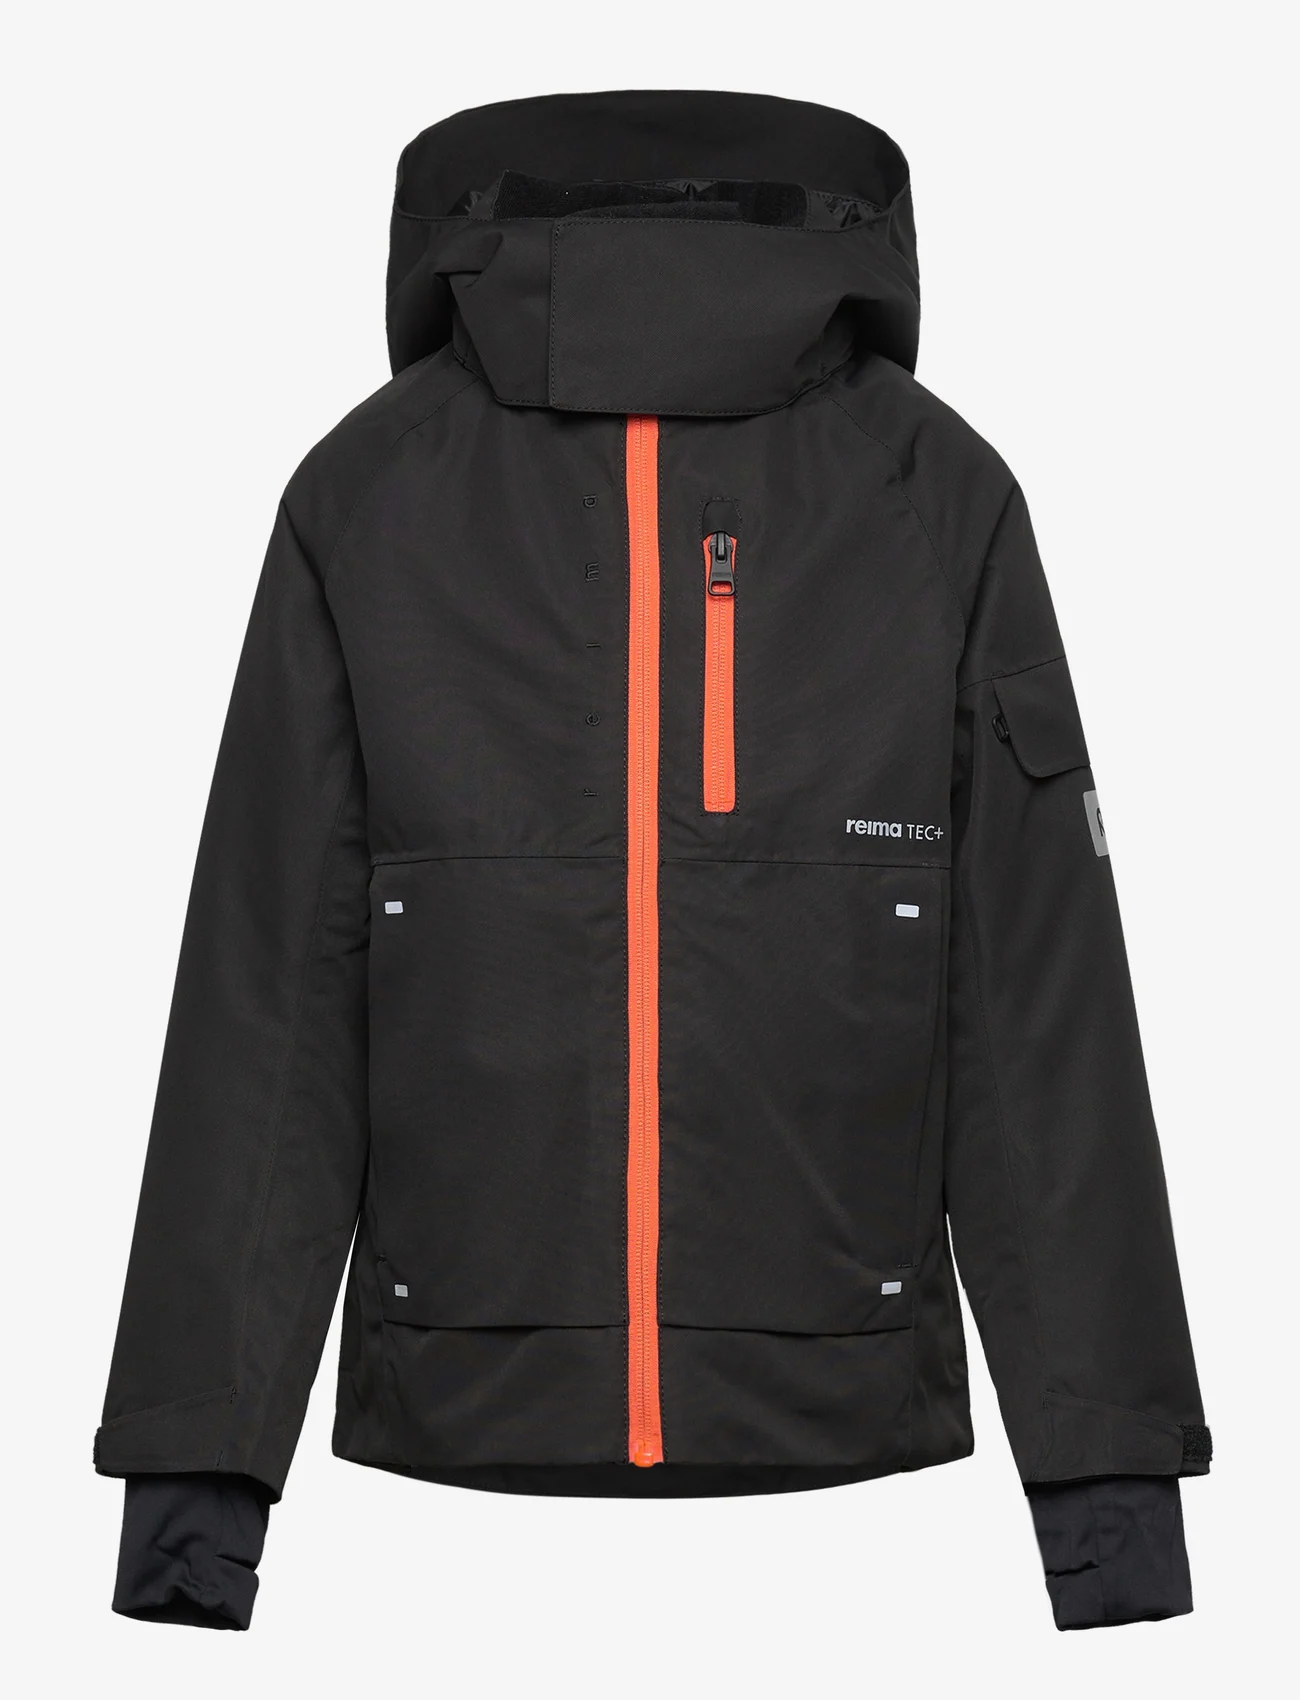 Reima - Reimatec winter jacket, Tieten - vinterjakker - black - 0